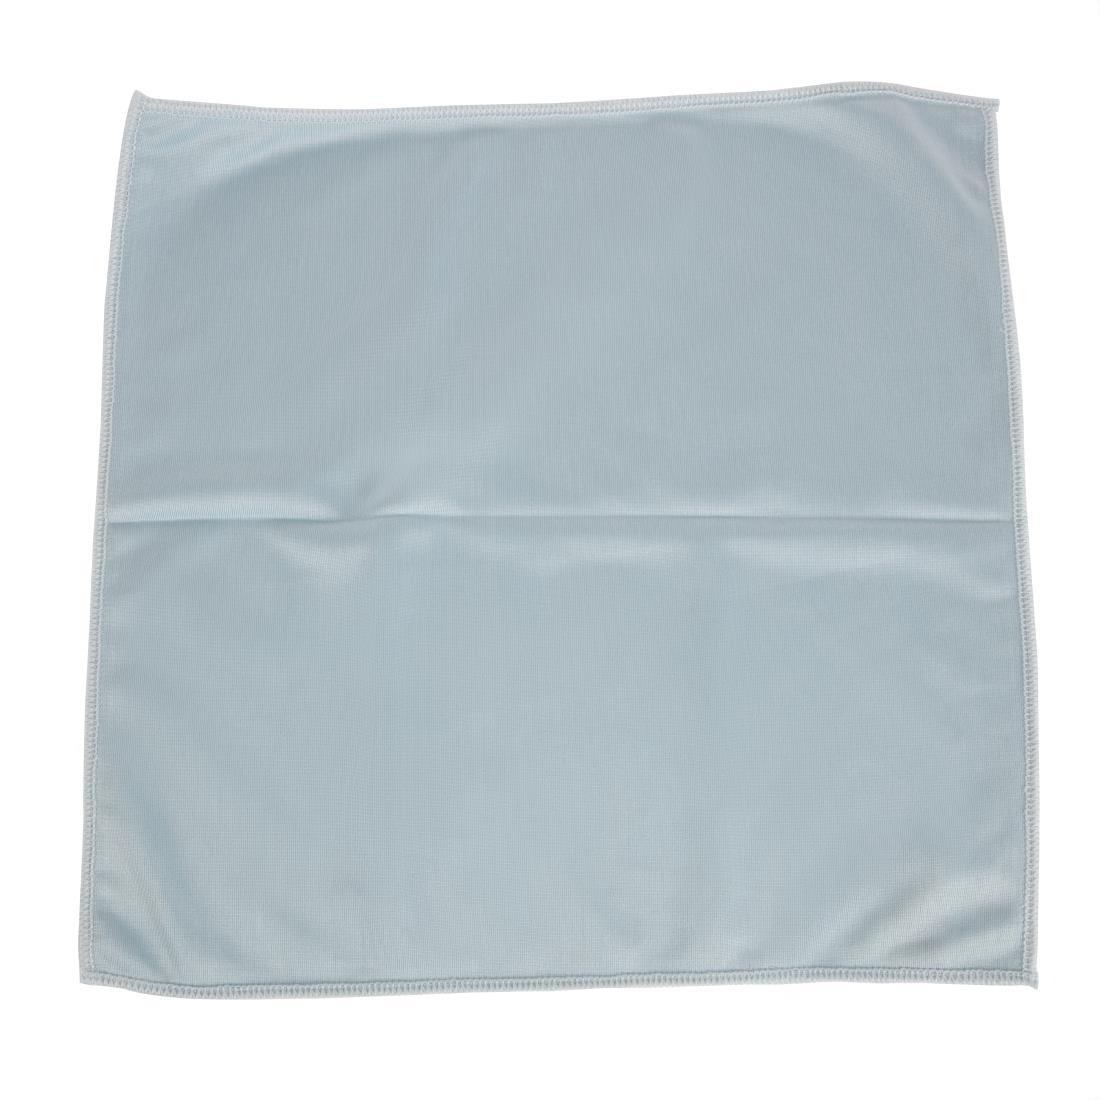 Jantex Microglass Cloth - DN842  - 4